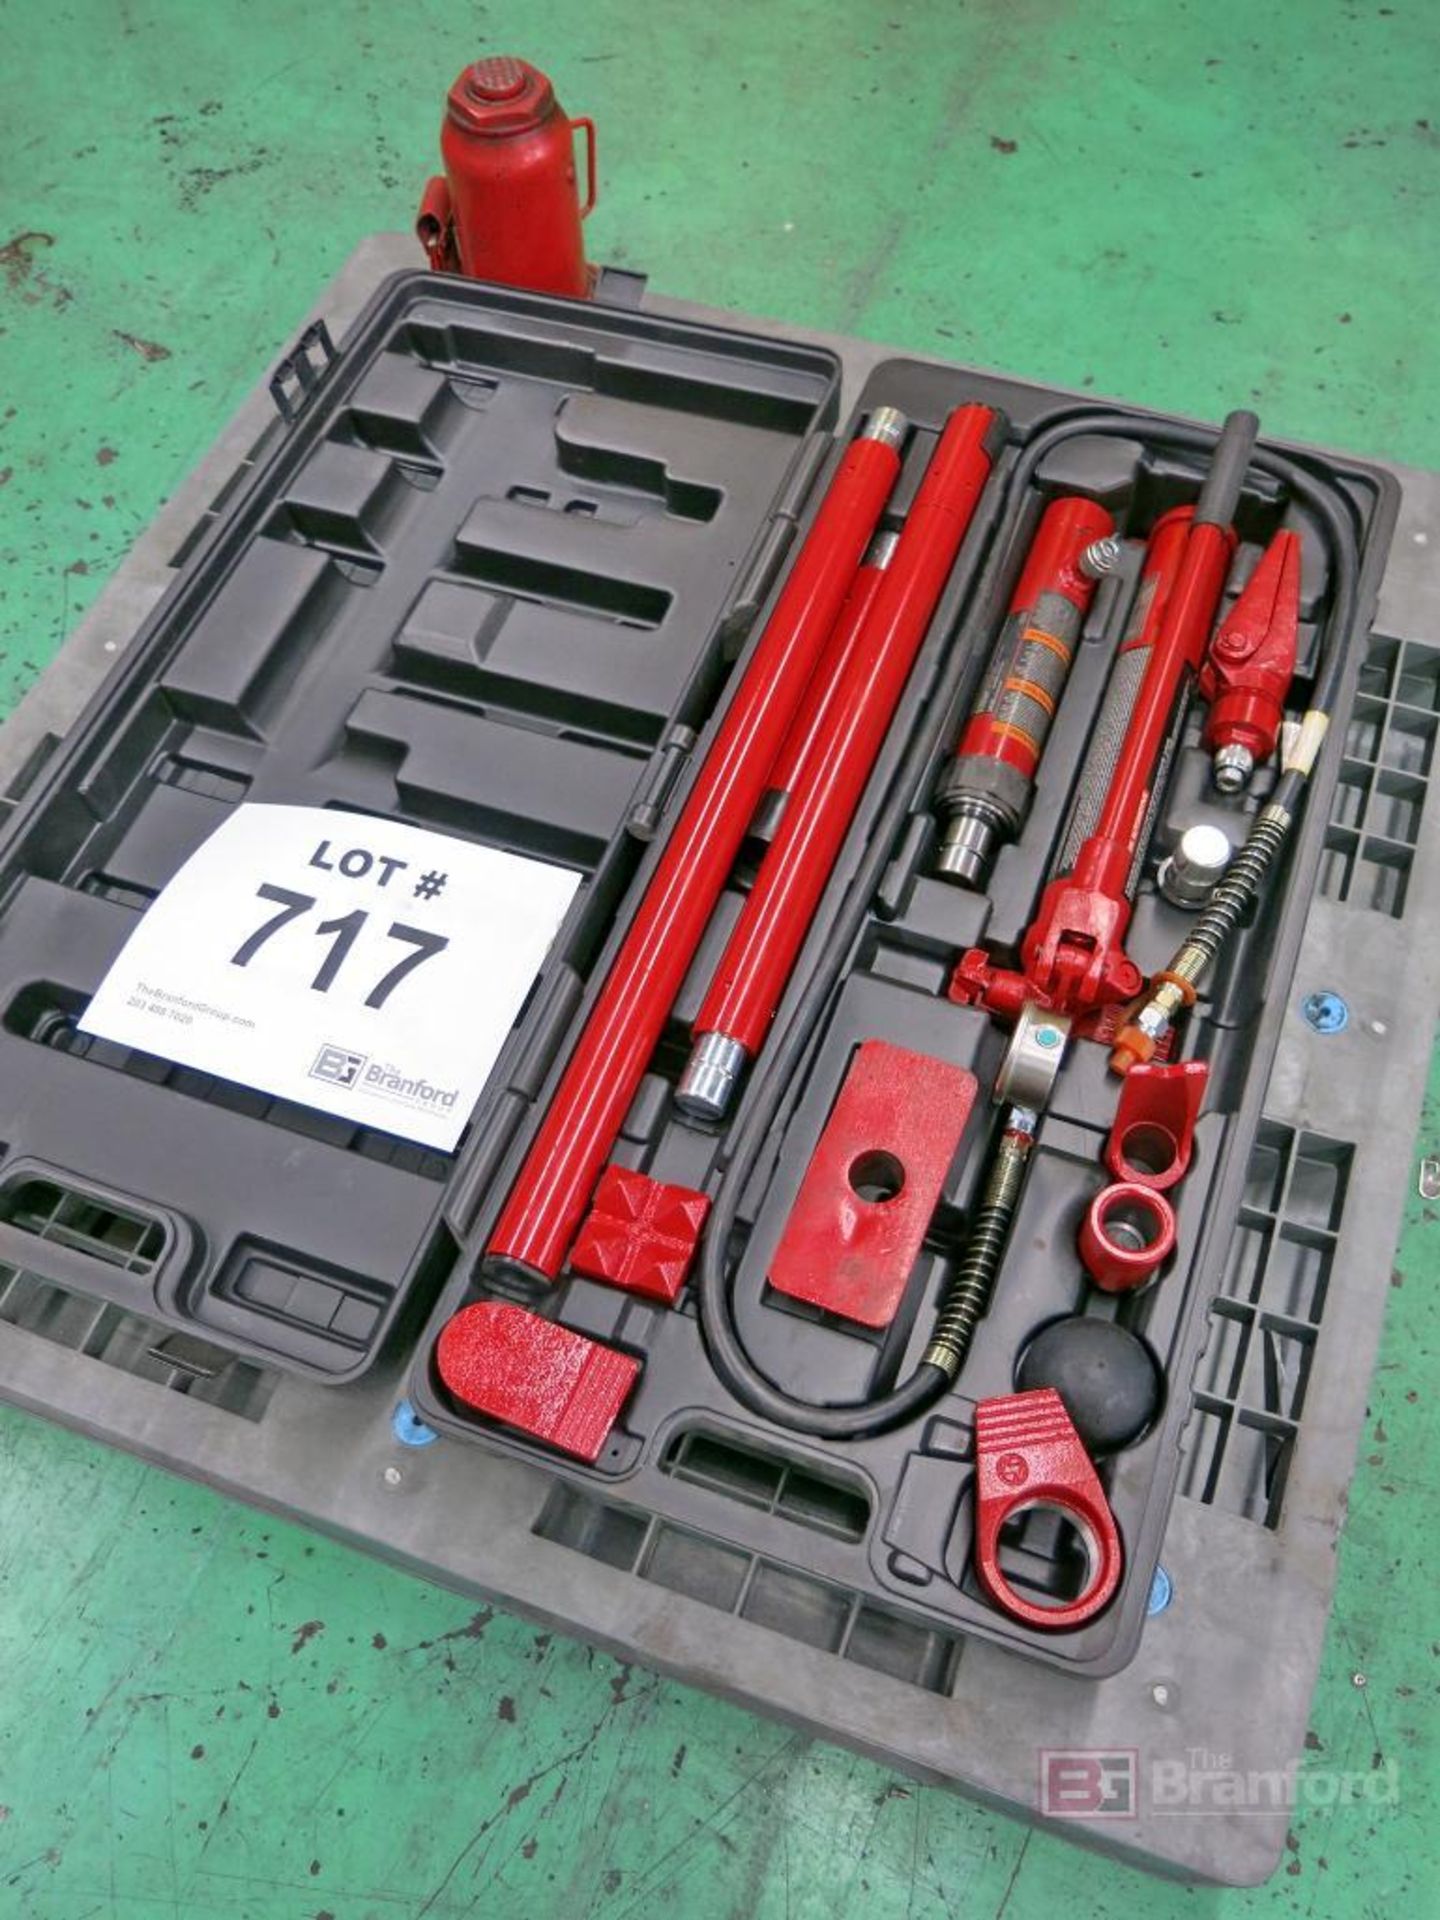 Labcock Automotive 10-Ton Portapower Kit